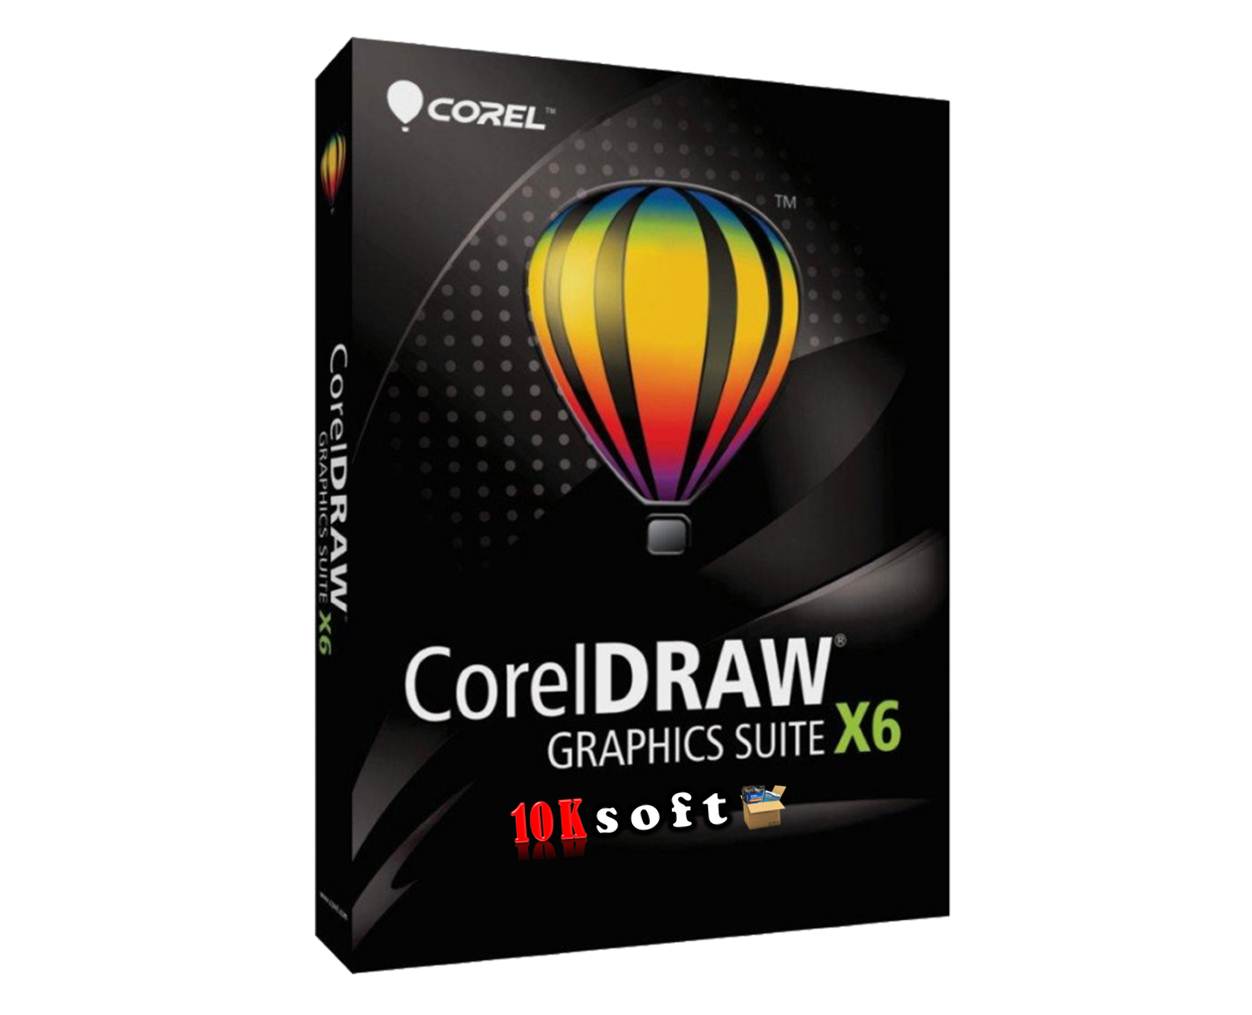 coreldraw graphics suite x6 terbaru full version free download